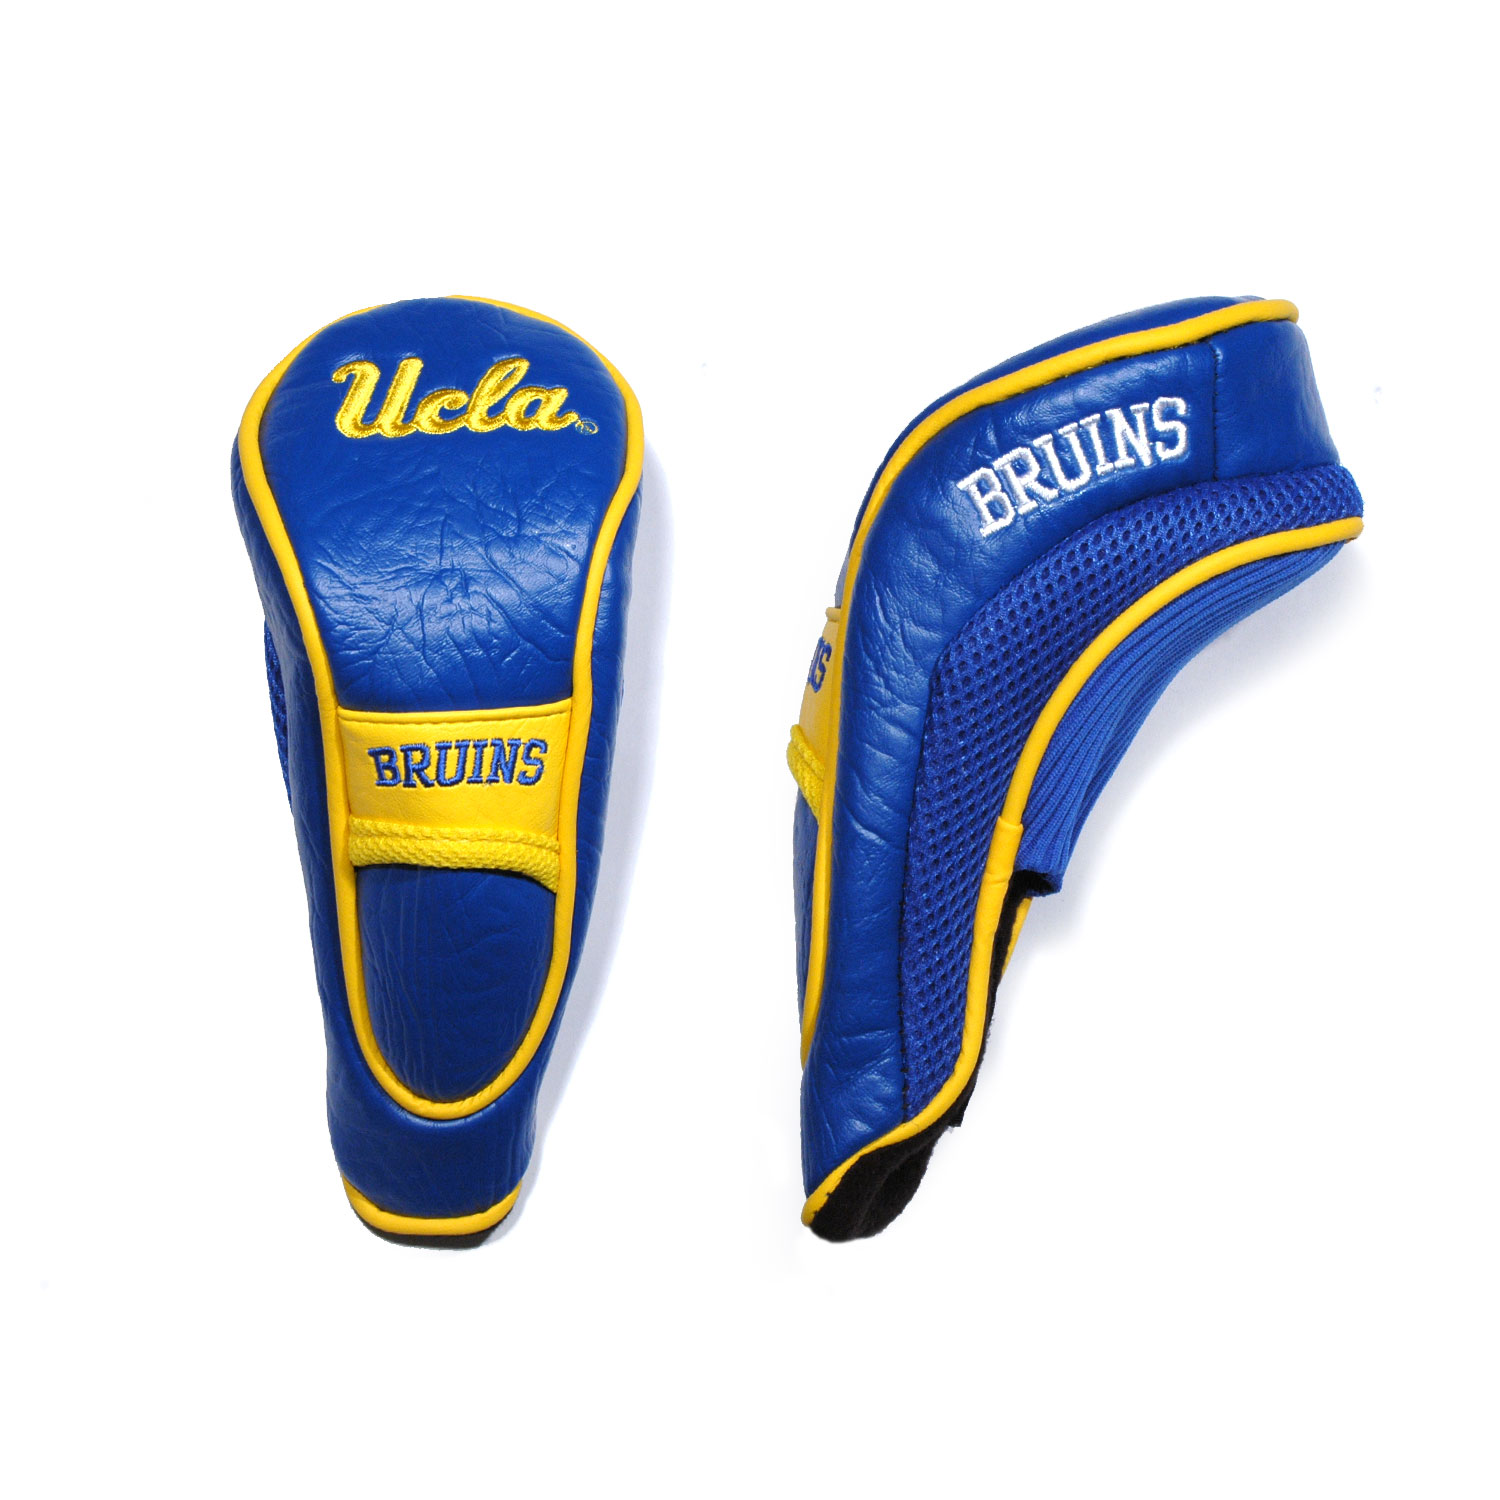 UCLA Hybrid Headcover